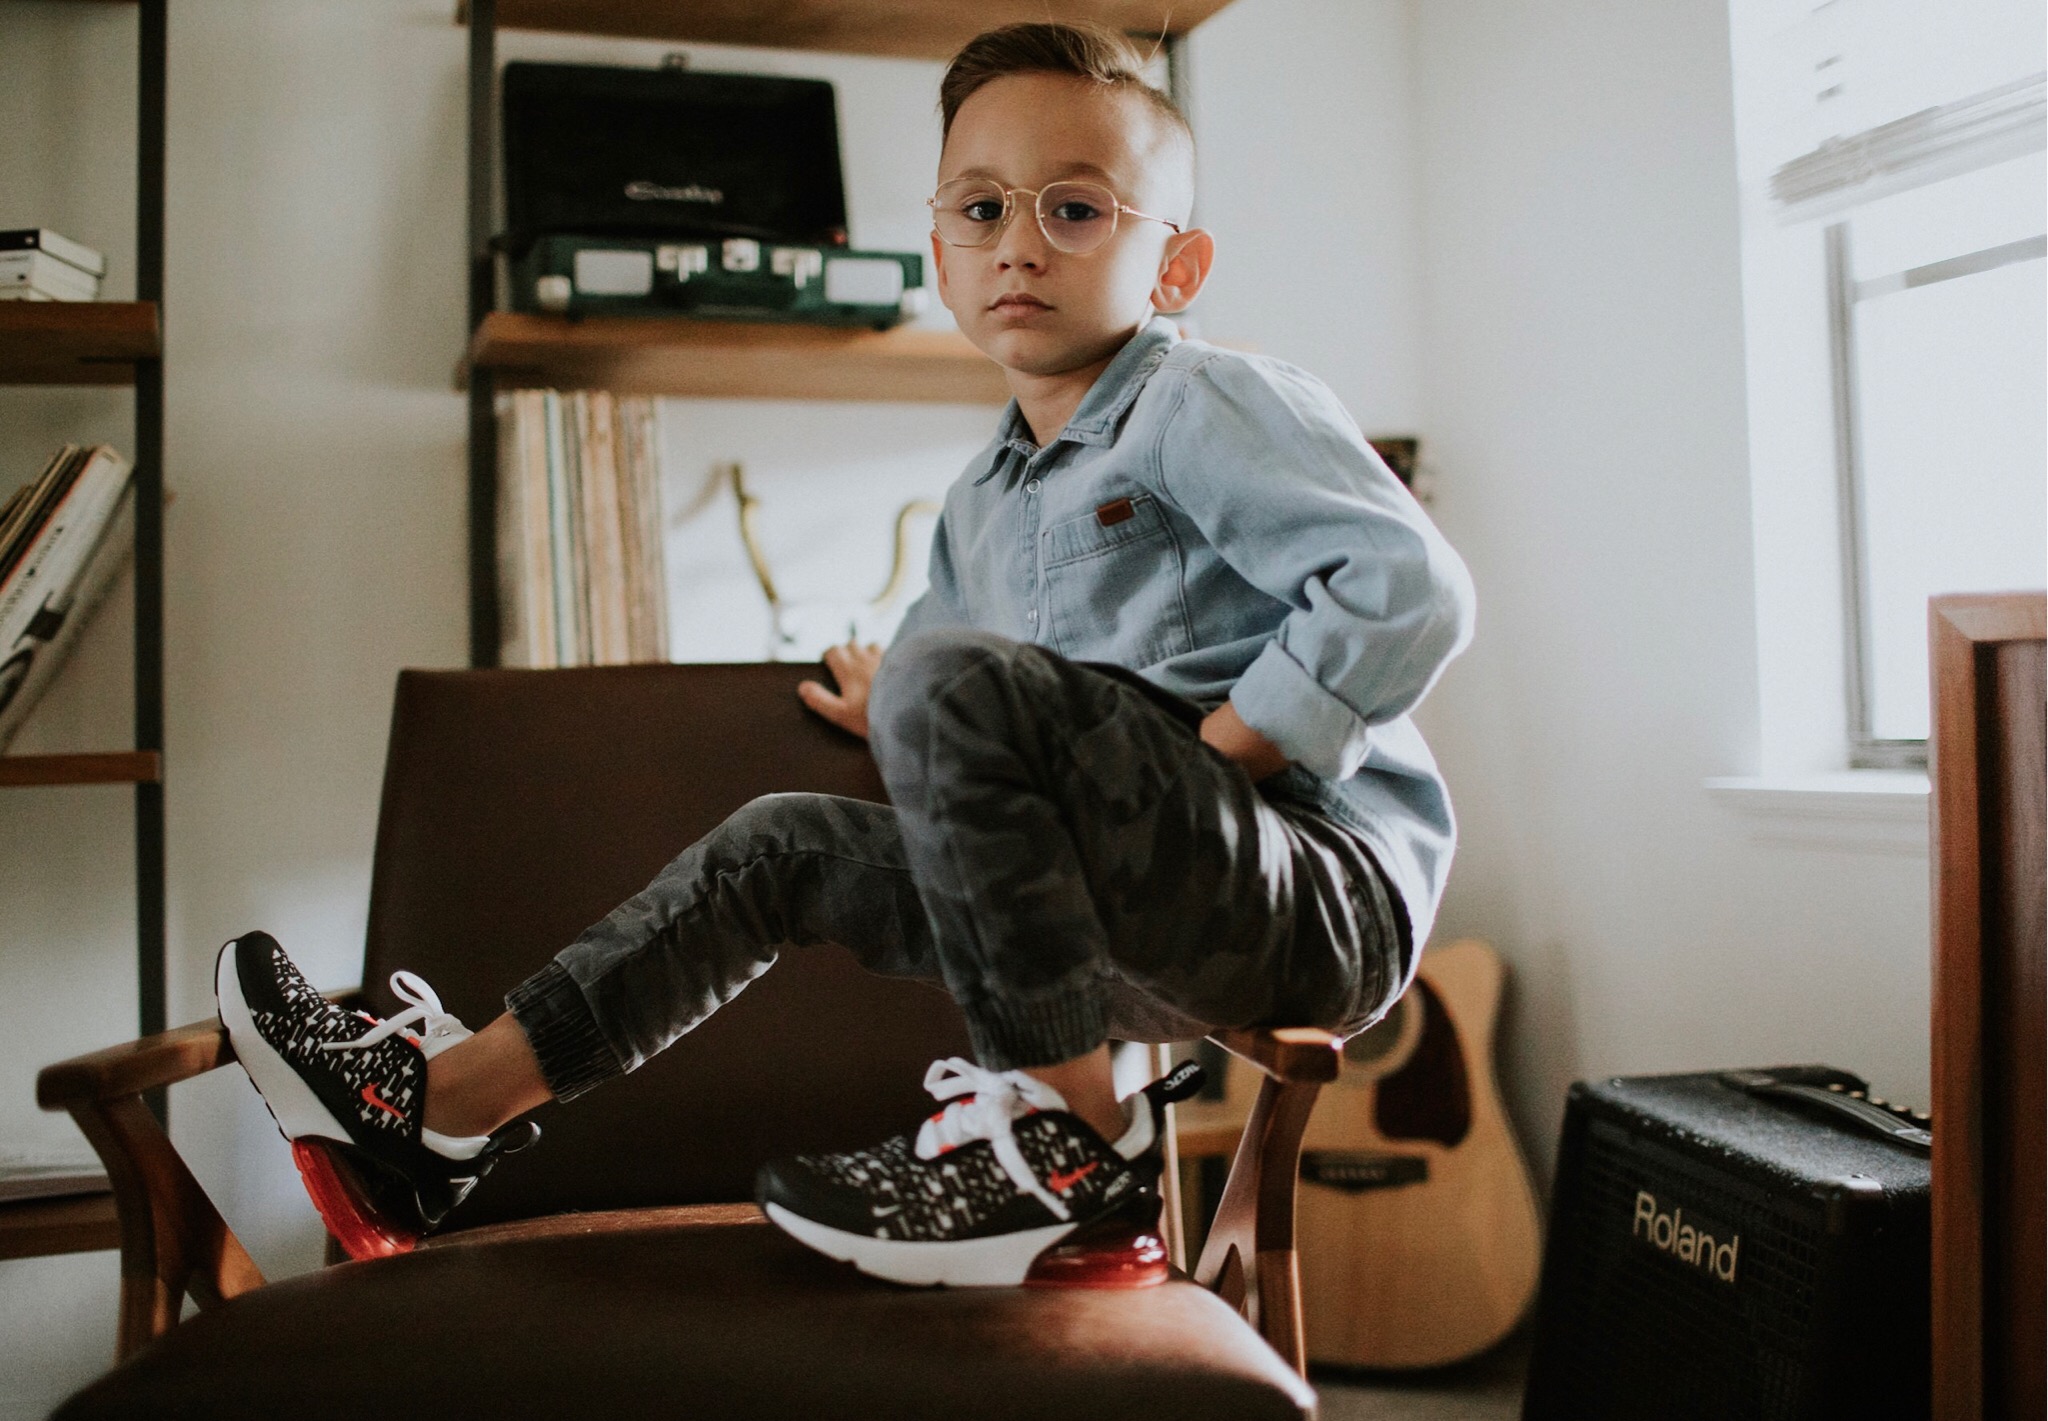 Lucas Boy | Orlando FL | MODEL | Hype kids | Photographed by Vanessa Boy .JPG